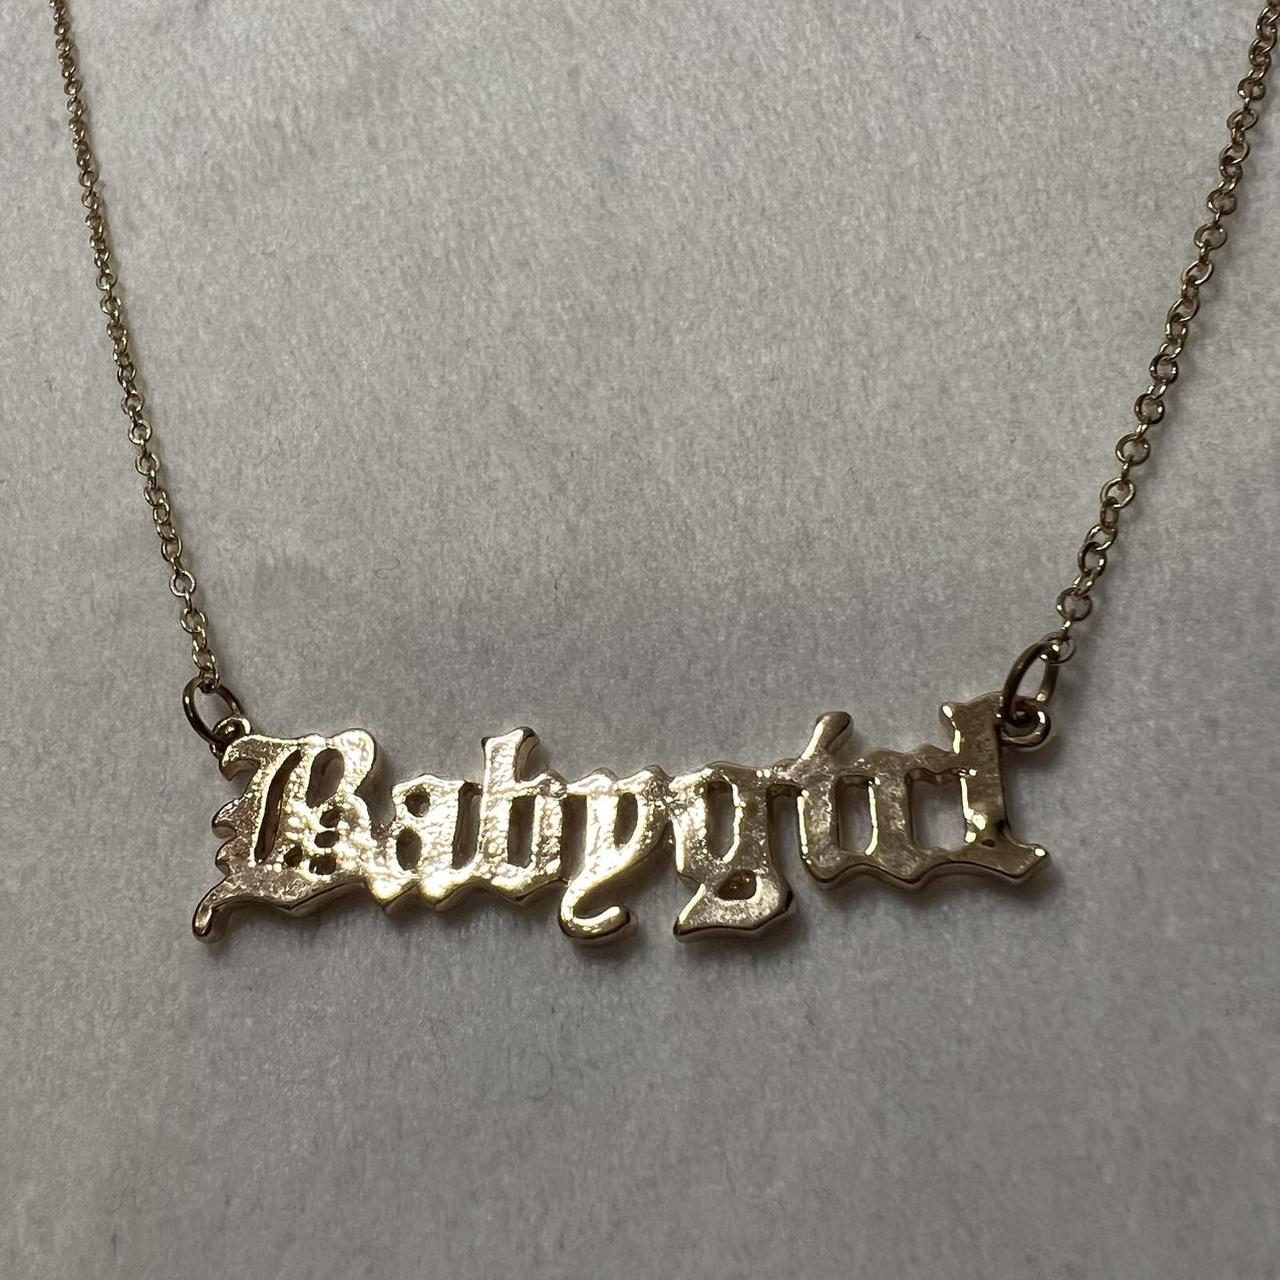 Nordstrom BP Babygirl Bar Necklace Gold Tone Multicolor Crystals | eBay